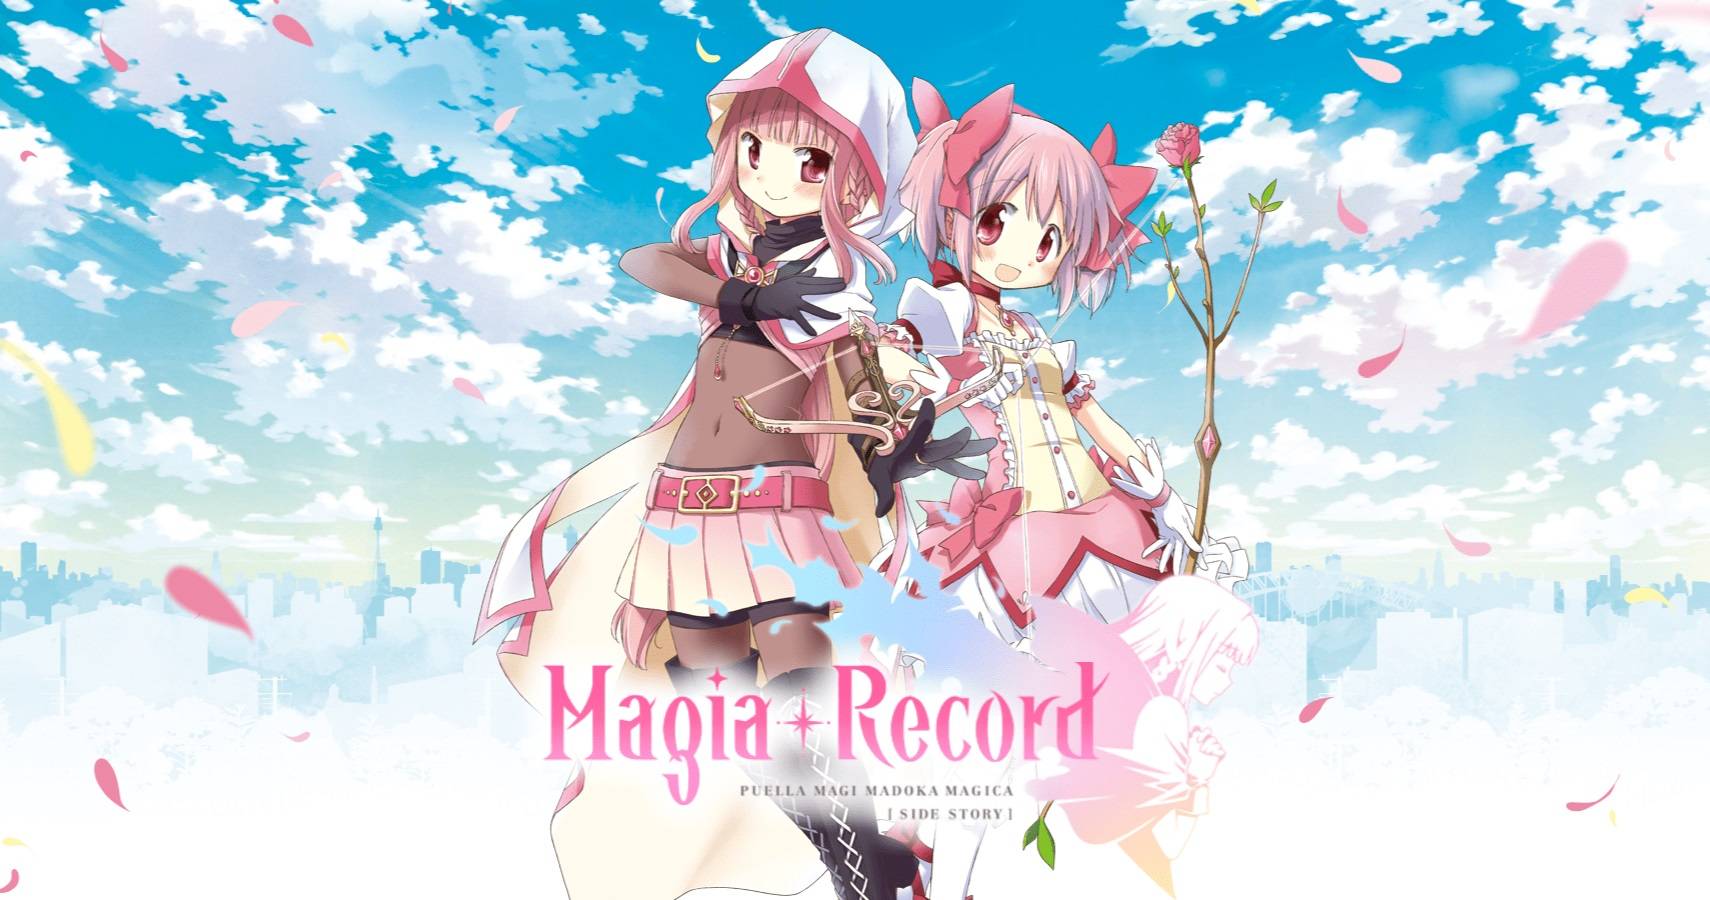 Is magia record canon